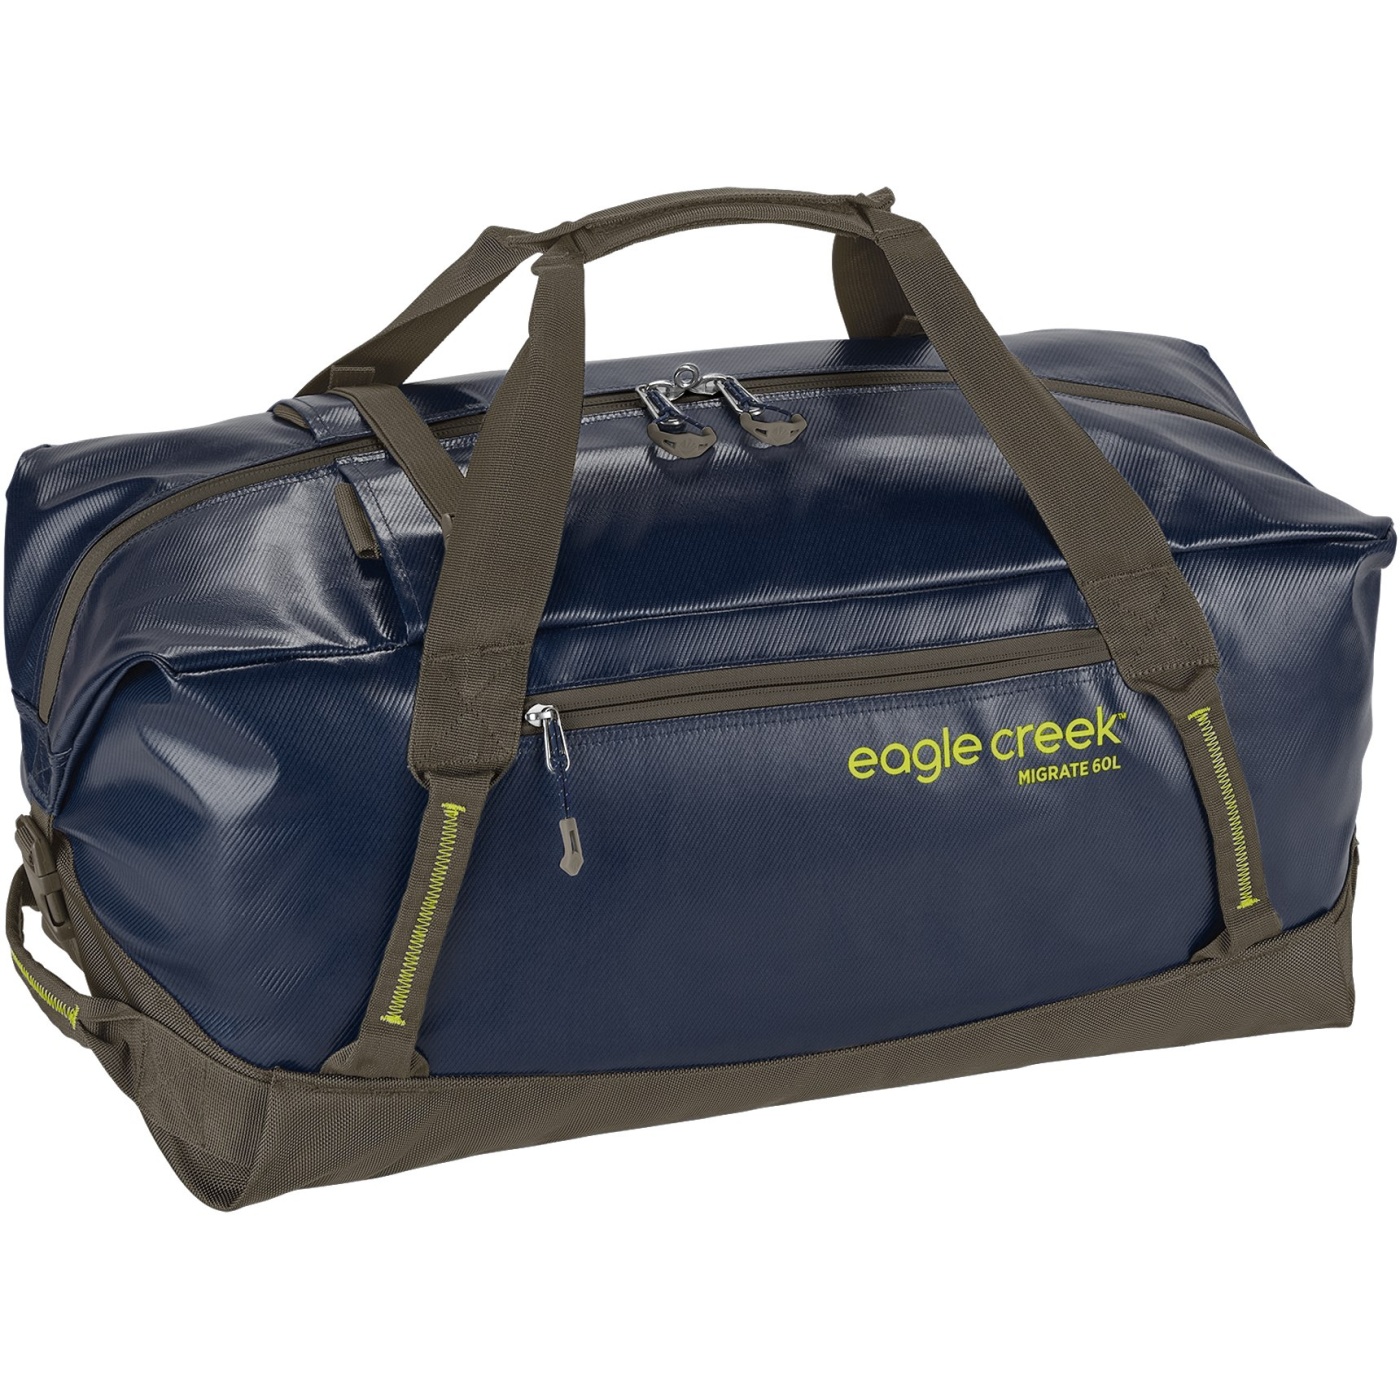 Eagle Creek Migrate Duffel - Travel Bag - 60 L - rush blue | BIKE24